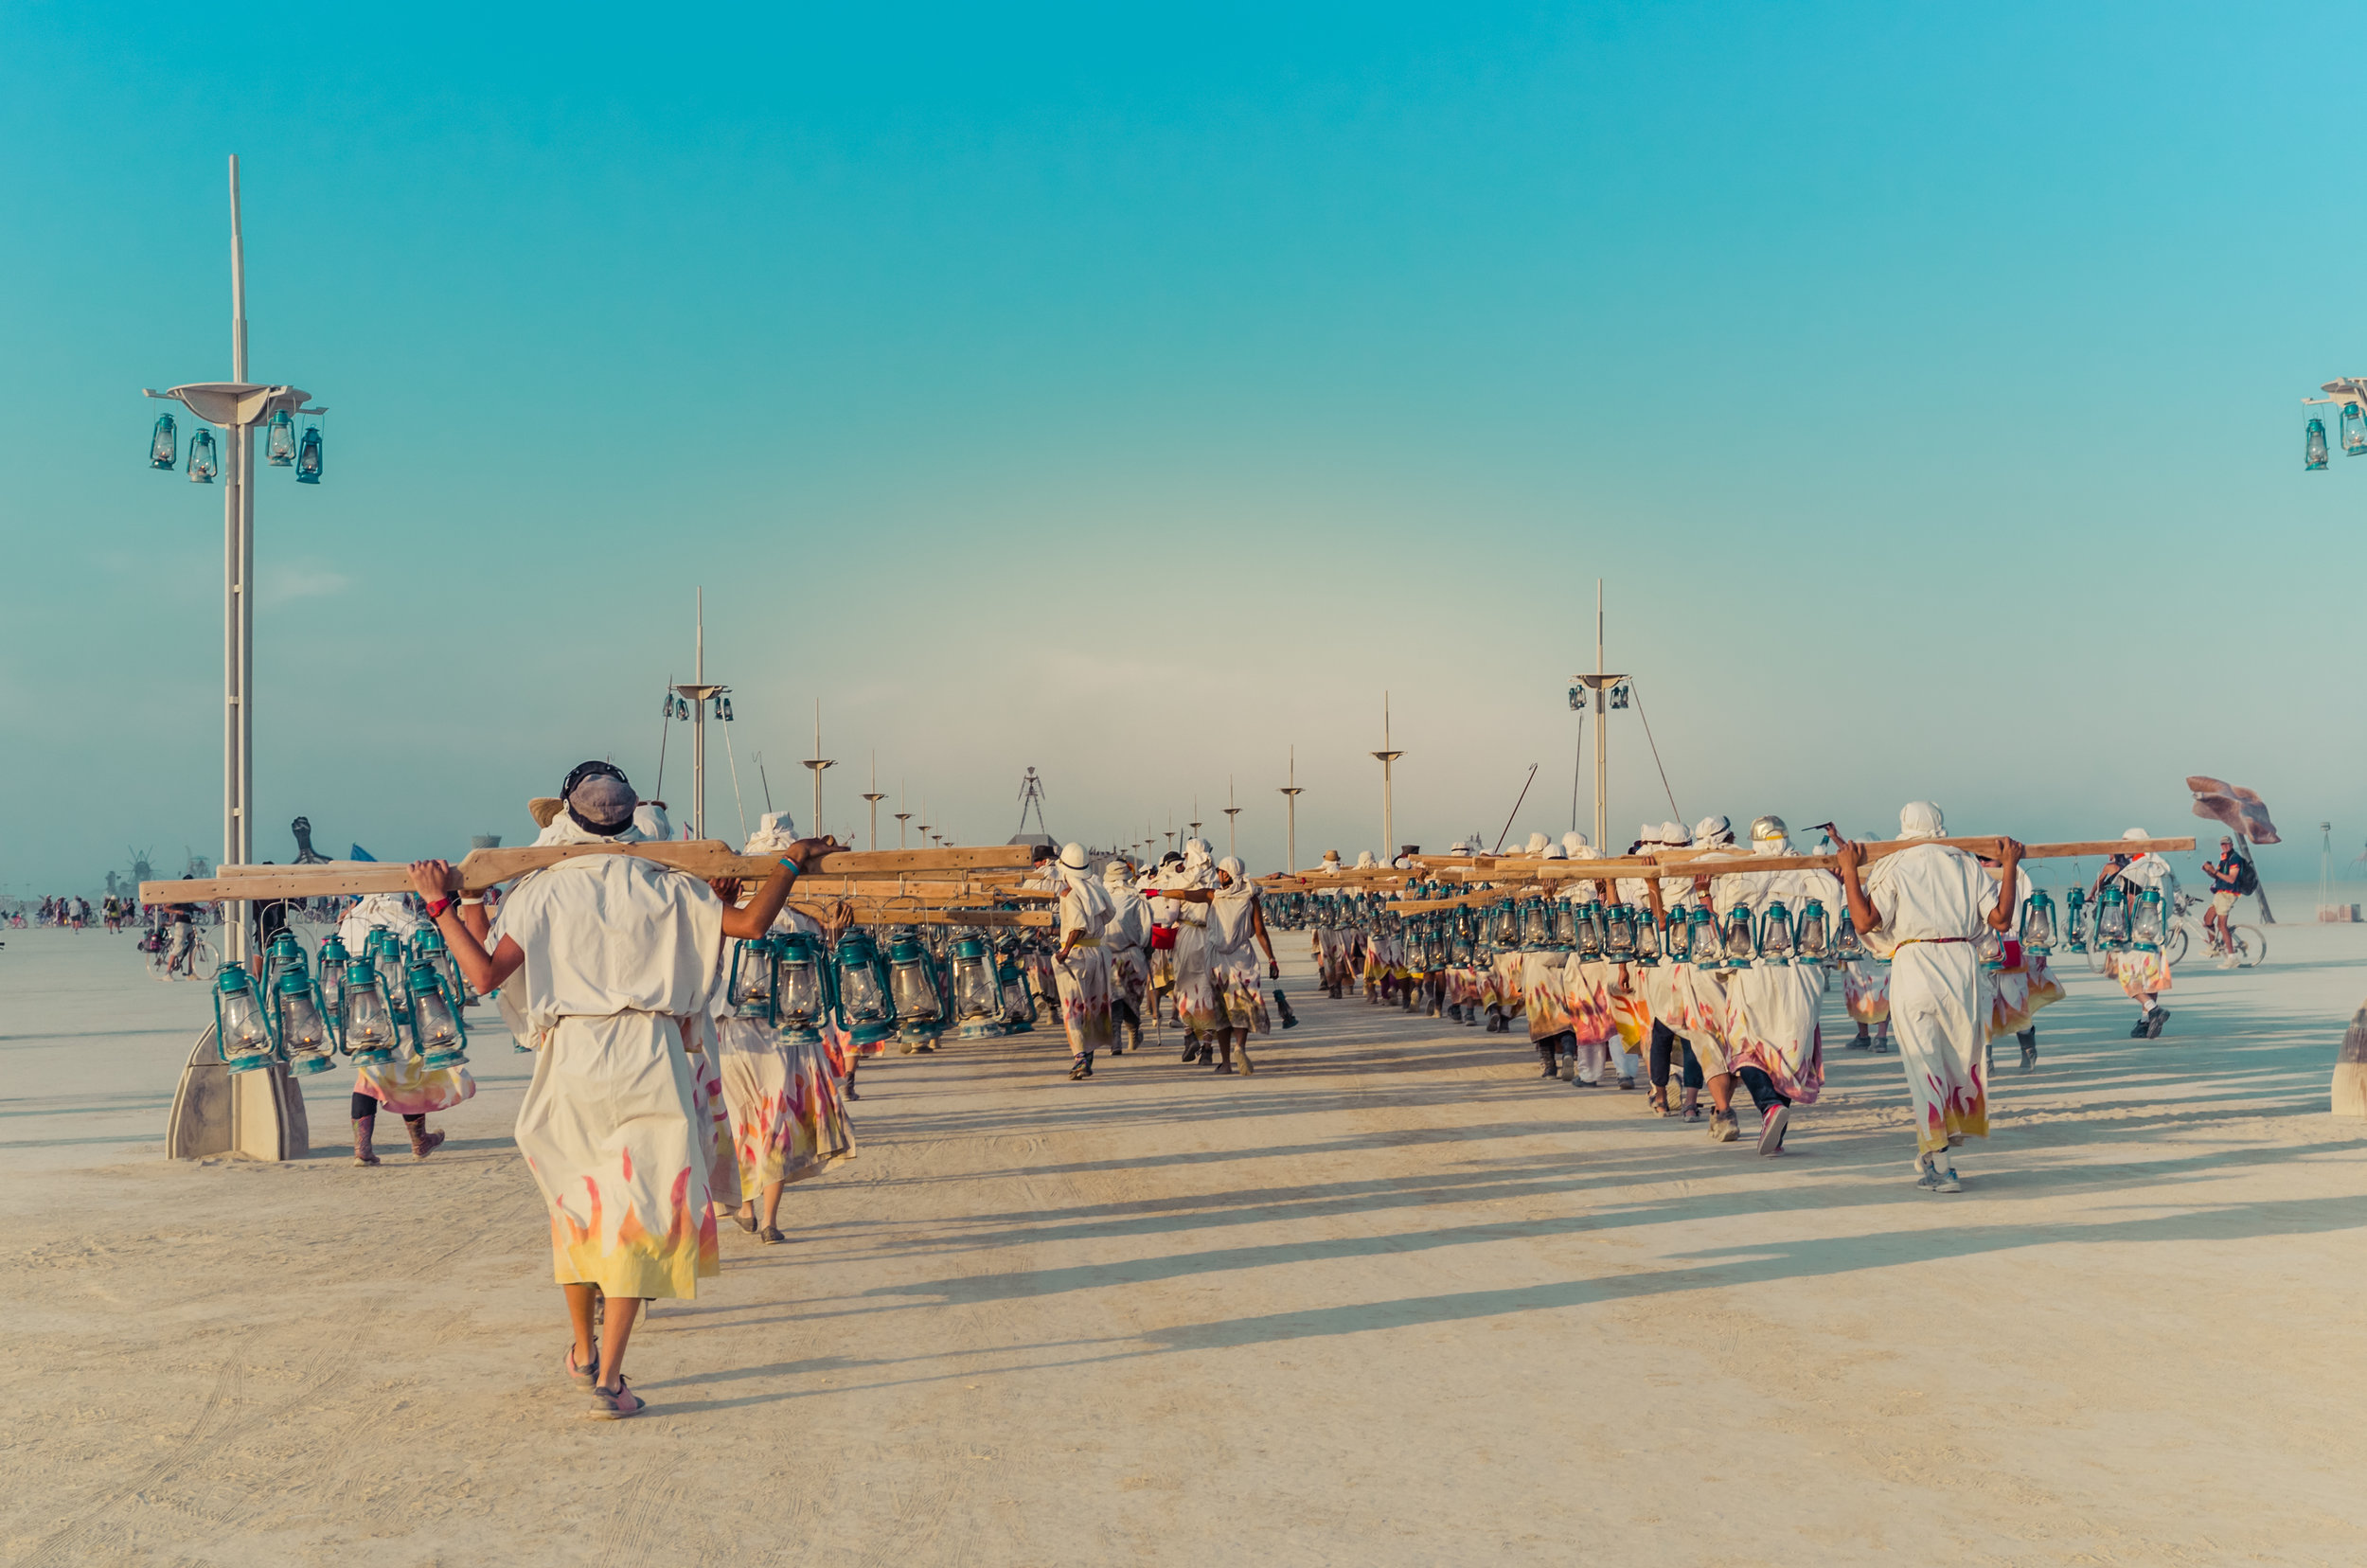 Burning Man 2018 - Lamplighters